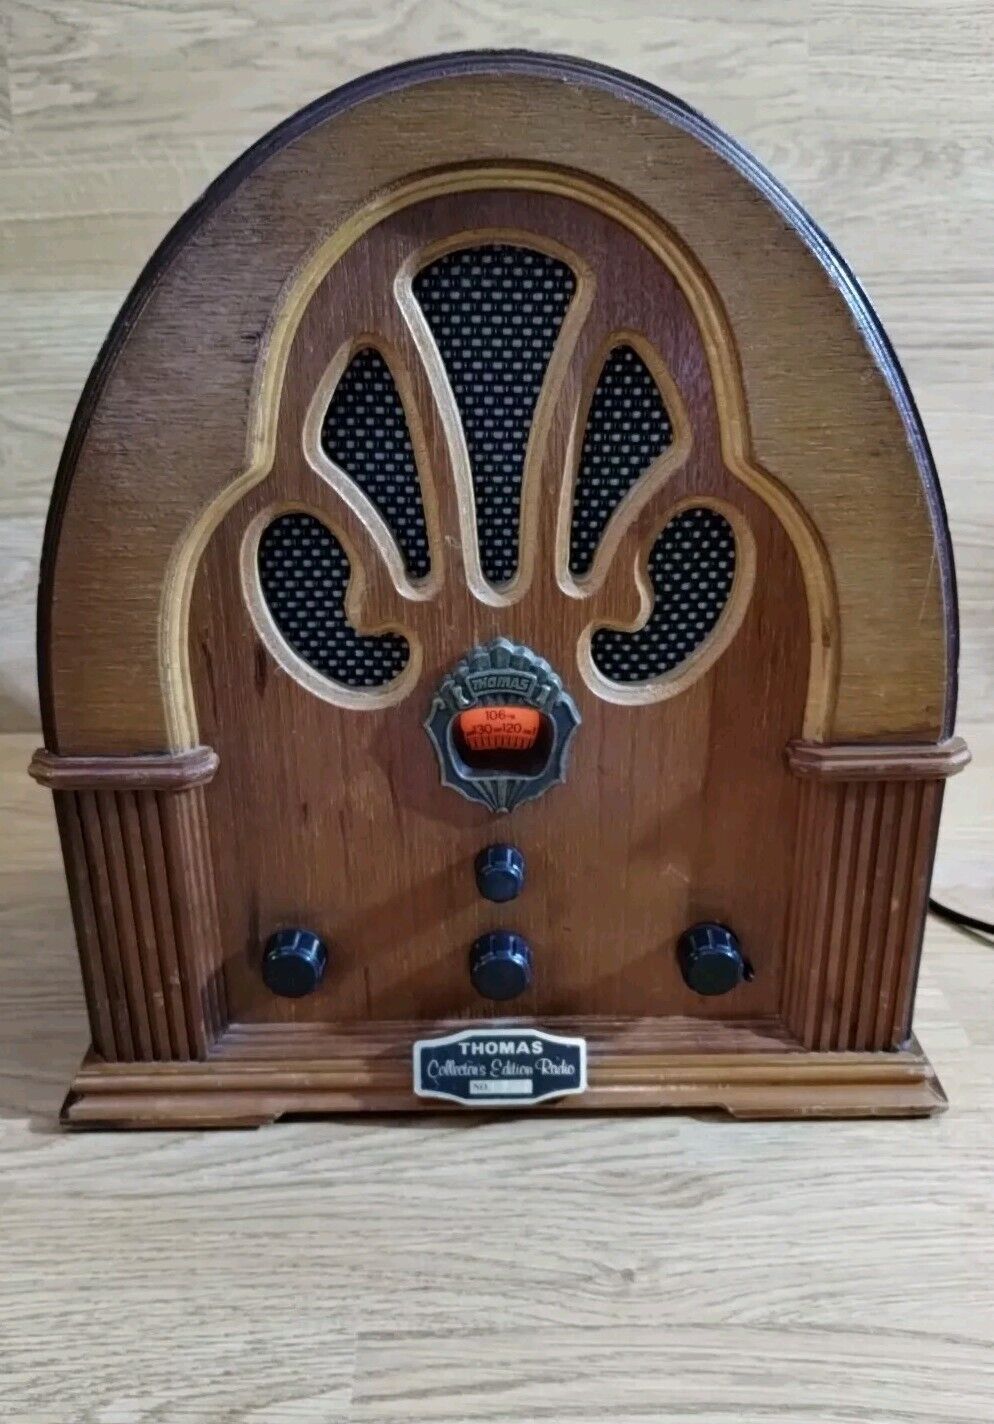 Rare Vintage 1986 Thomas Collector's Edition Radio Model BD 109 AM/FM  WORKS